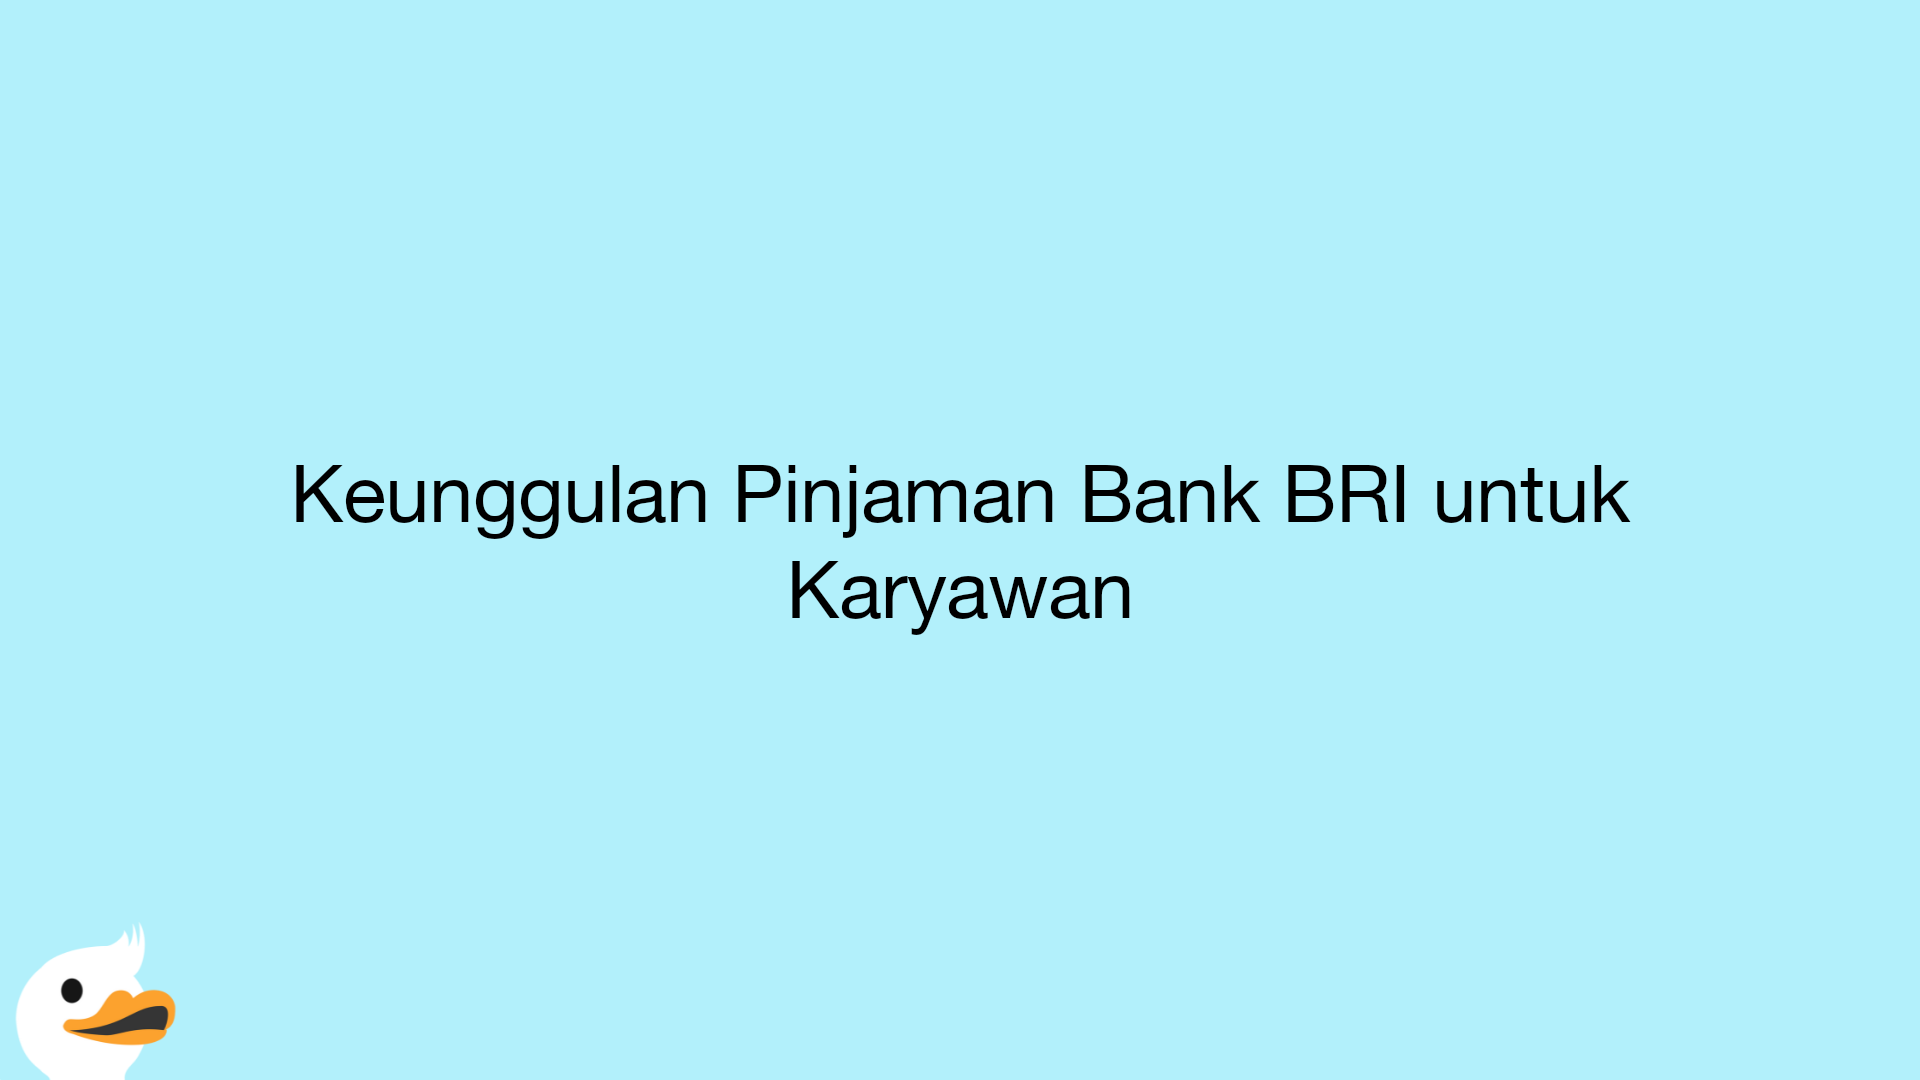 Keunggulan Pinjaman Bank BRI untuk Karyawan